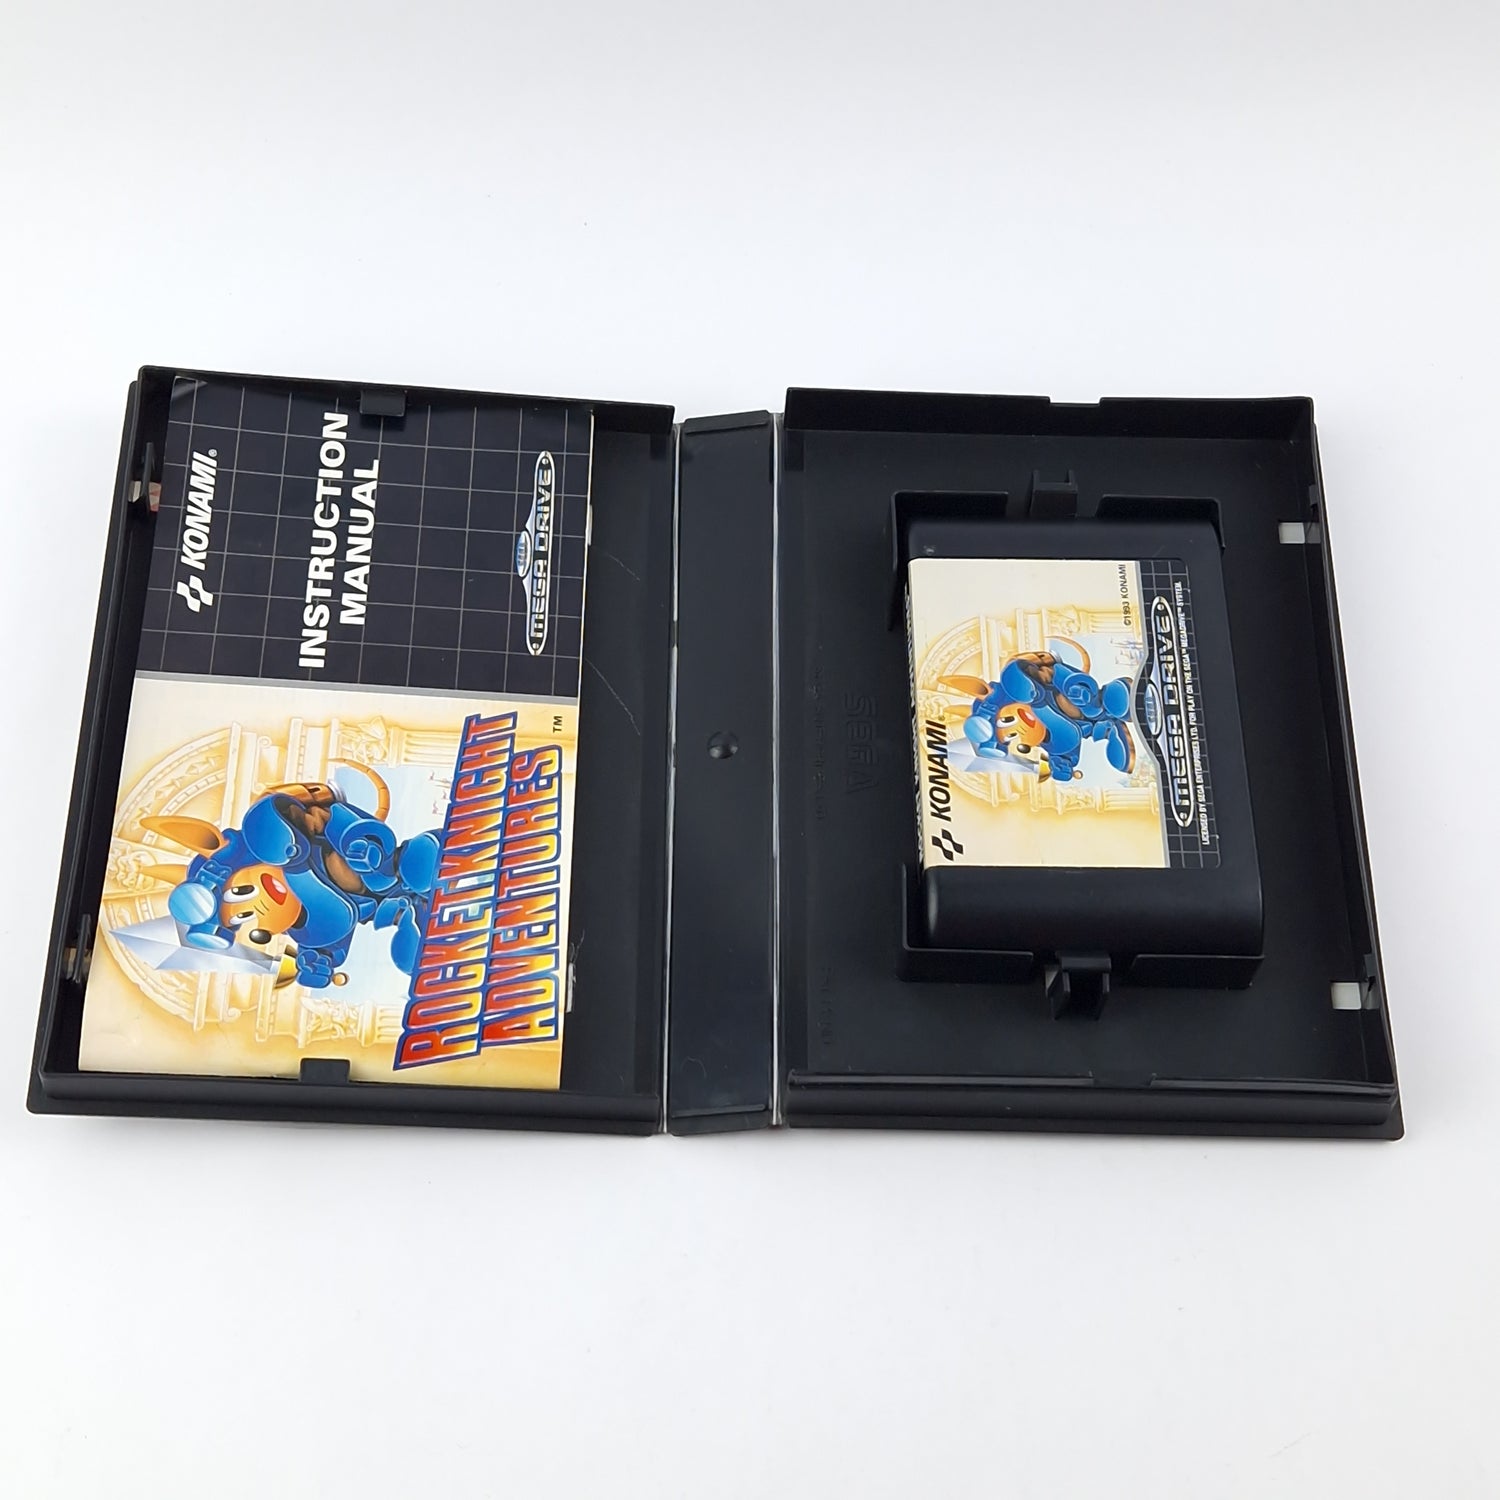 Sega Mega Drive Game: Rocket Knight Adventures - Module Instructions OVP cib PAL